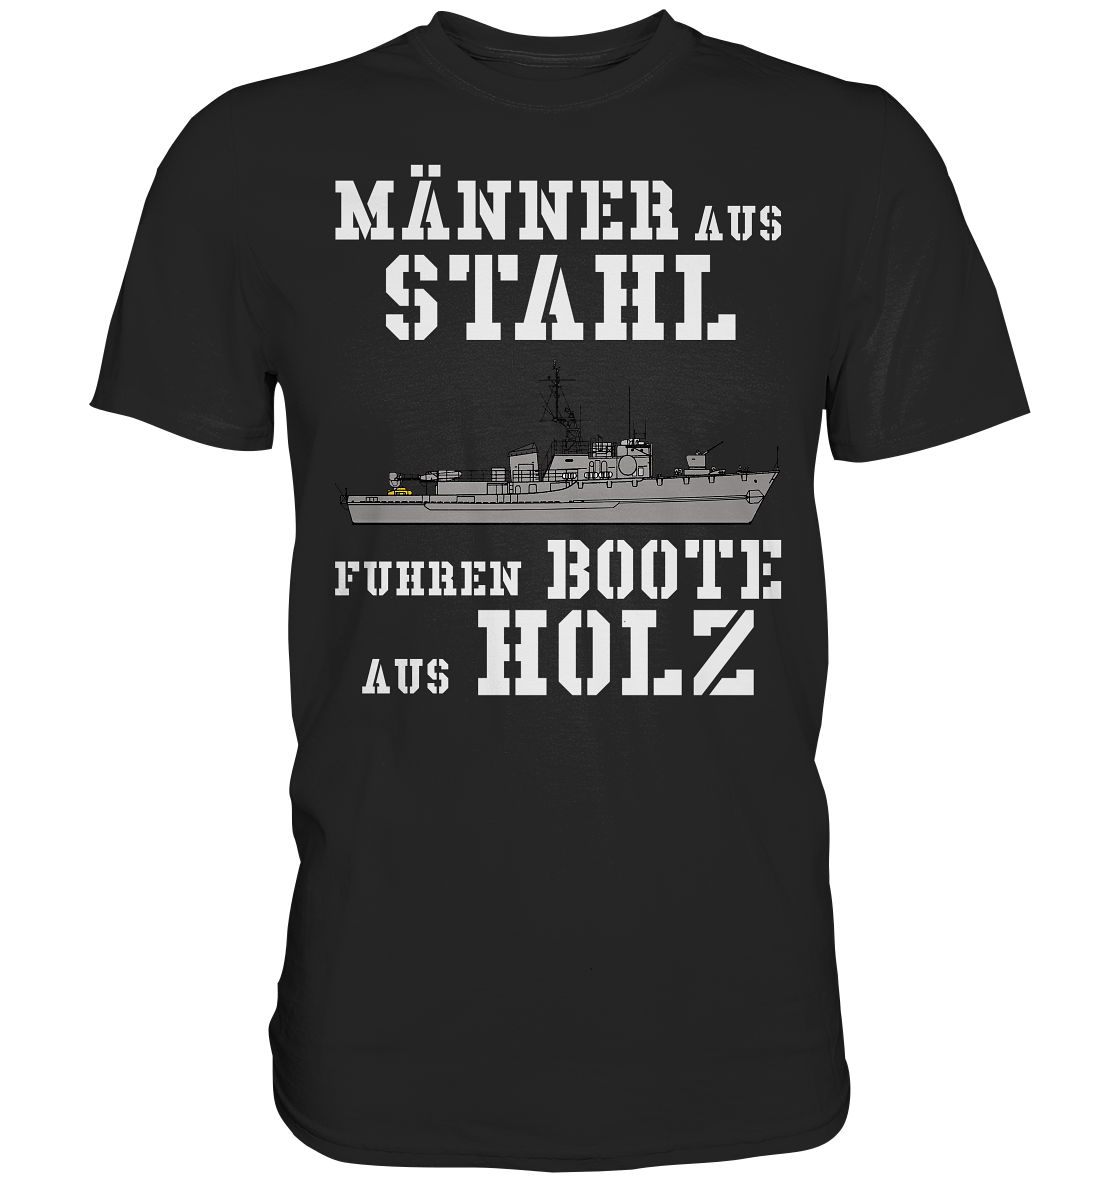 Männer aus Stahl...  Mij.-Boot LINDAU-Klasse - Premium Shirt